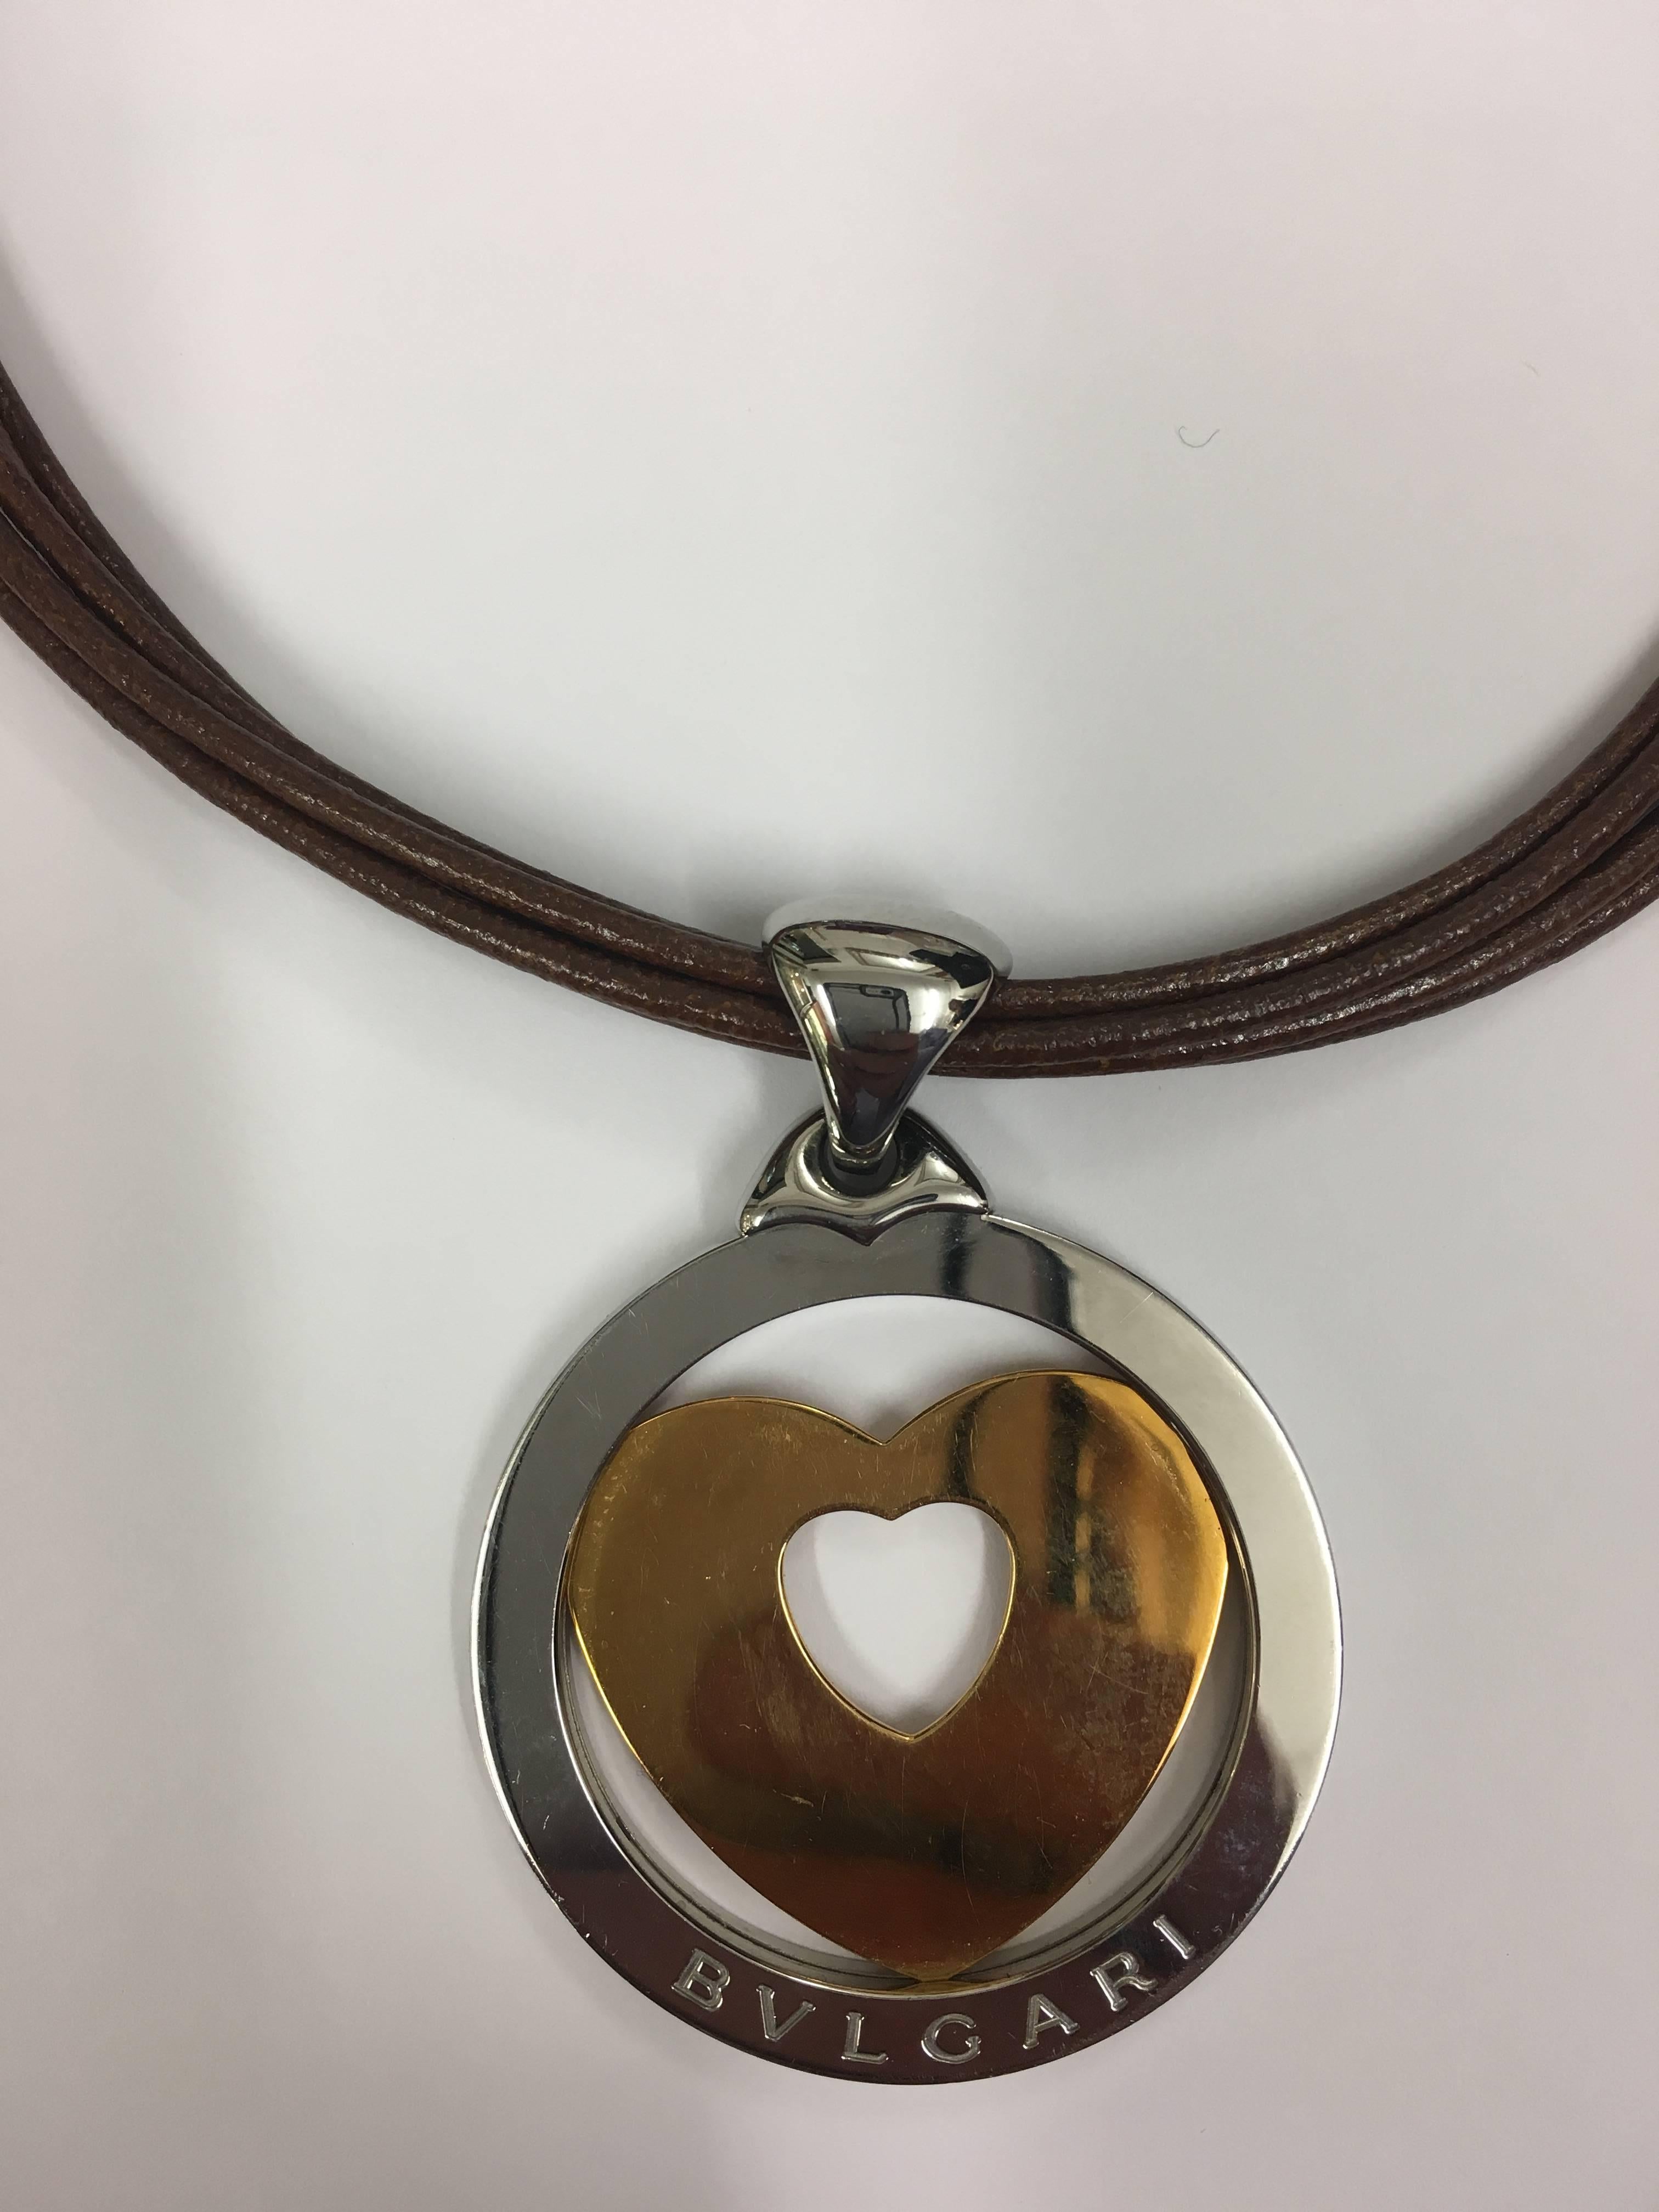 bvlgari leather necklace